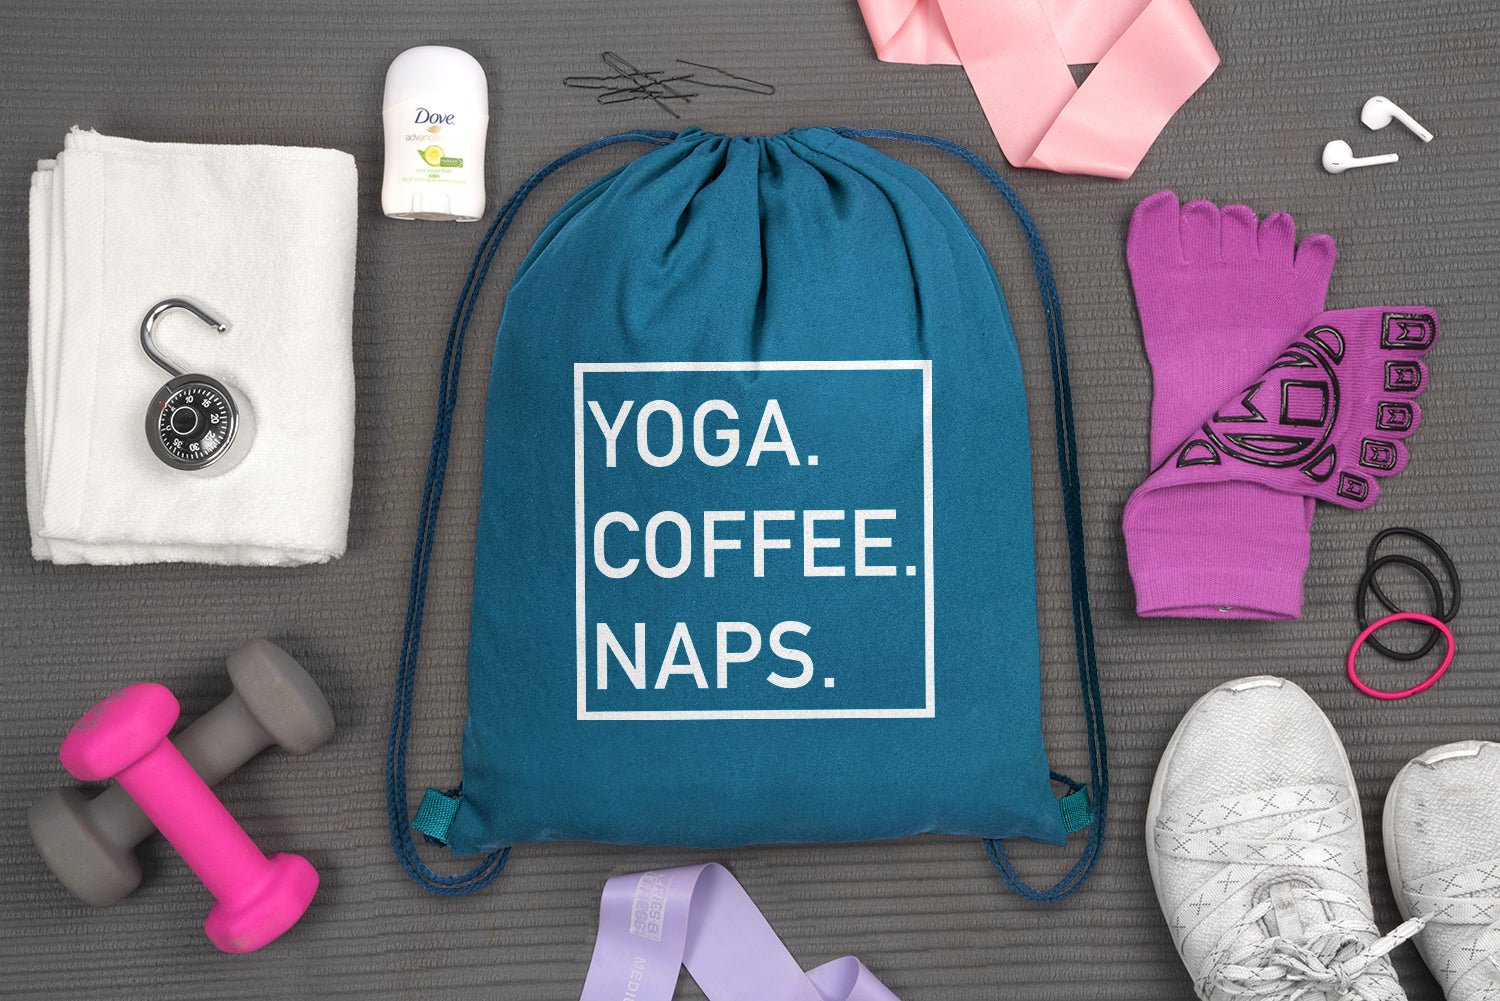 Yoga. Coffee. Naps. Cotton Drawstring Bag - Mato & Hash